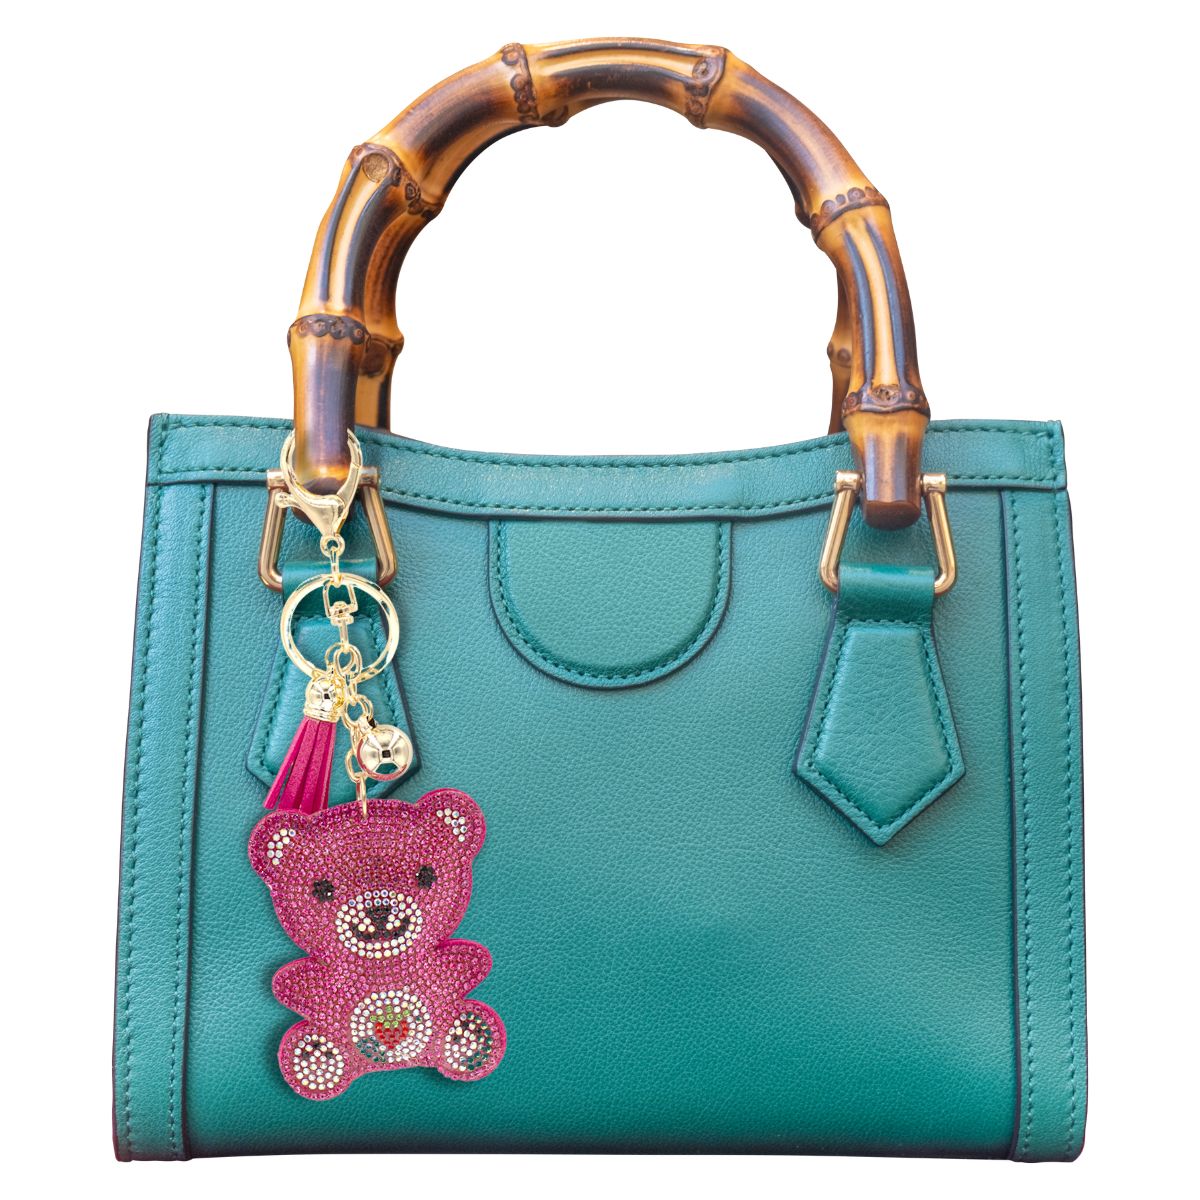 Teddy Bear Keychain Bag Charm